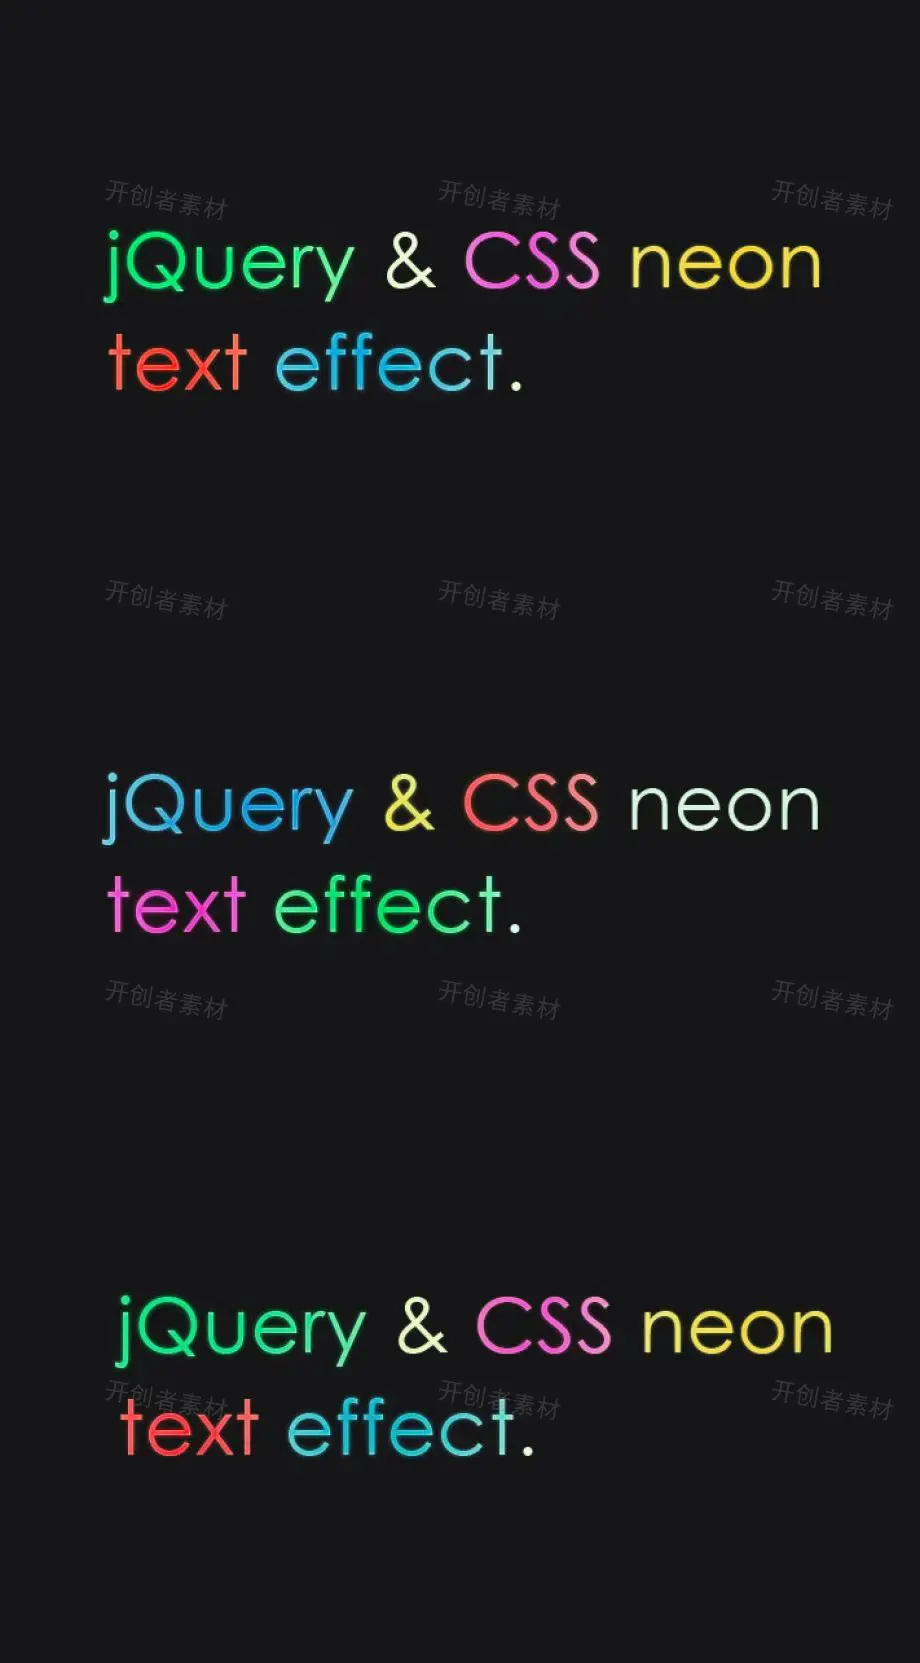  jquery 文字特效霓虹灯文字效果使用jQuery和CS